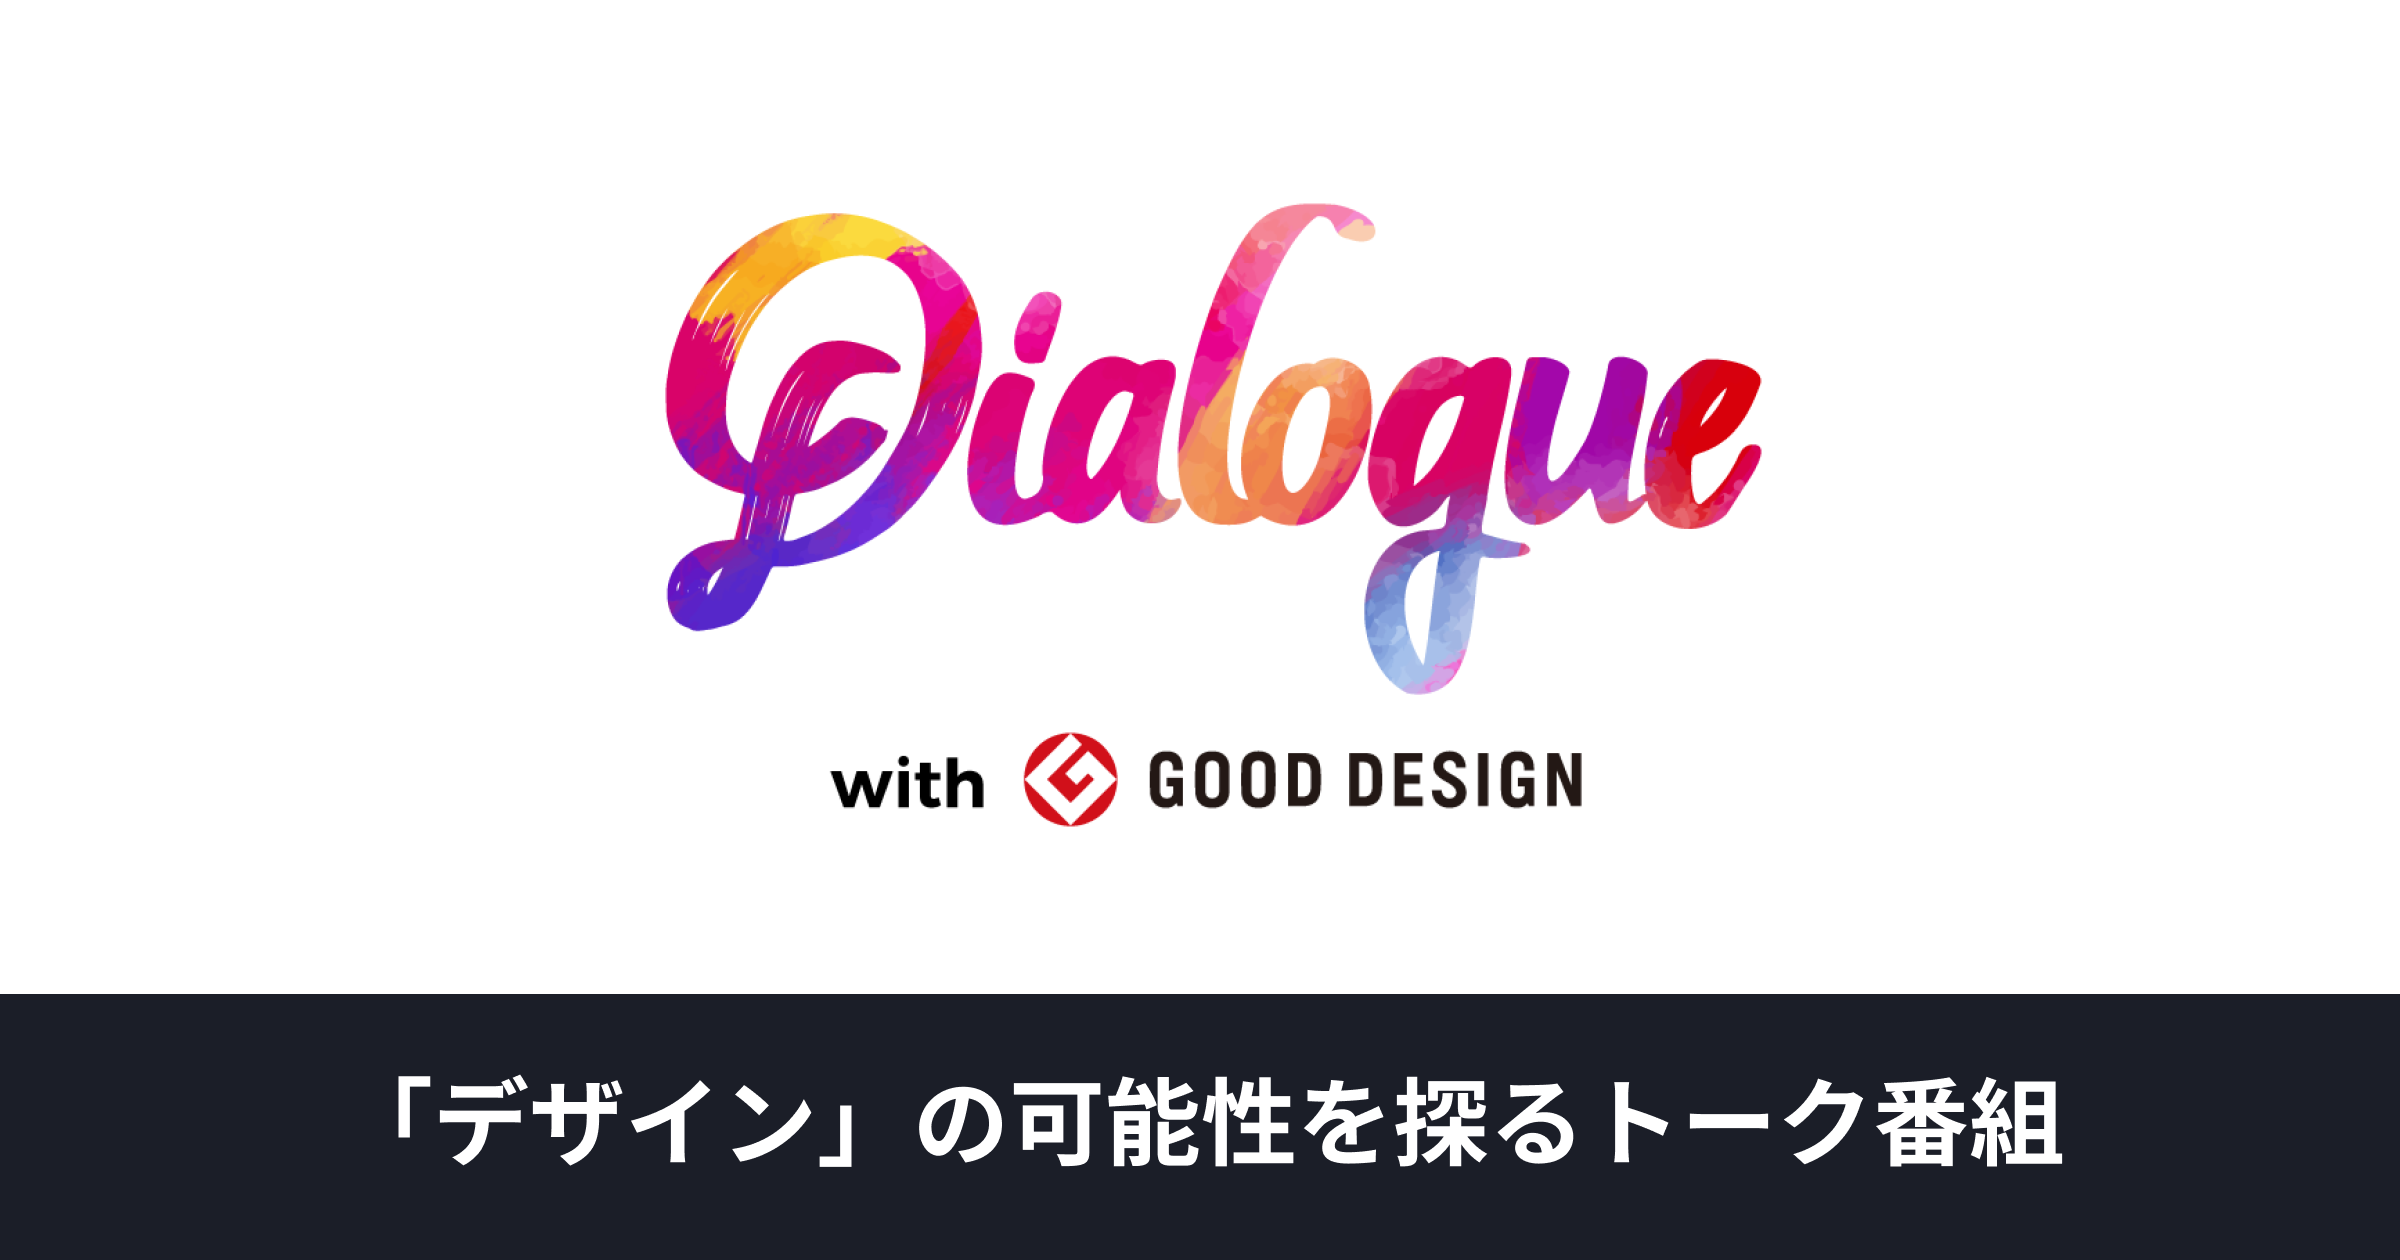 Dialogue by Designship with GOOD DESIGN AWARD